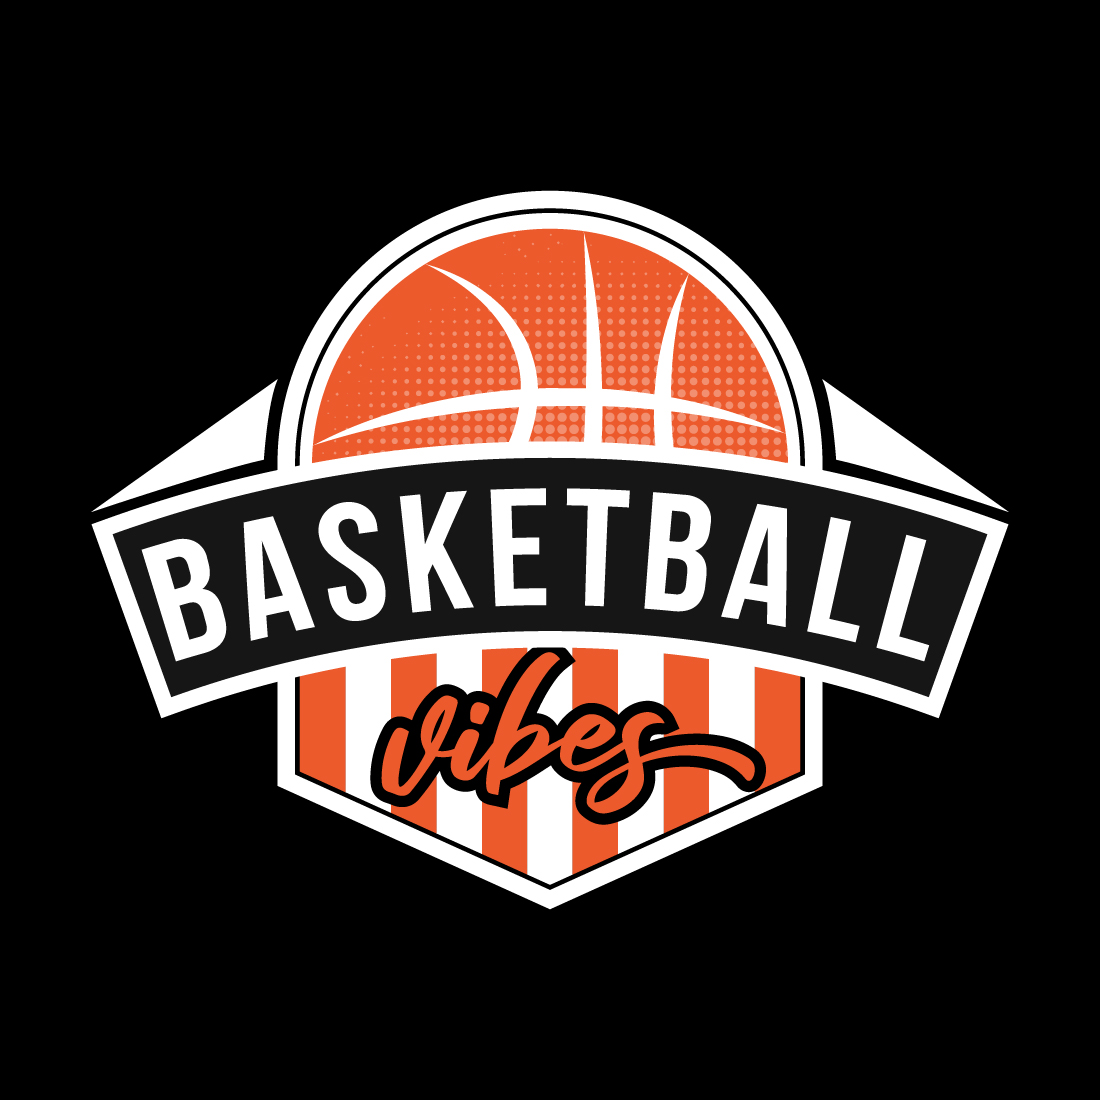 Basketball logo on a black background.